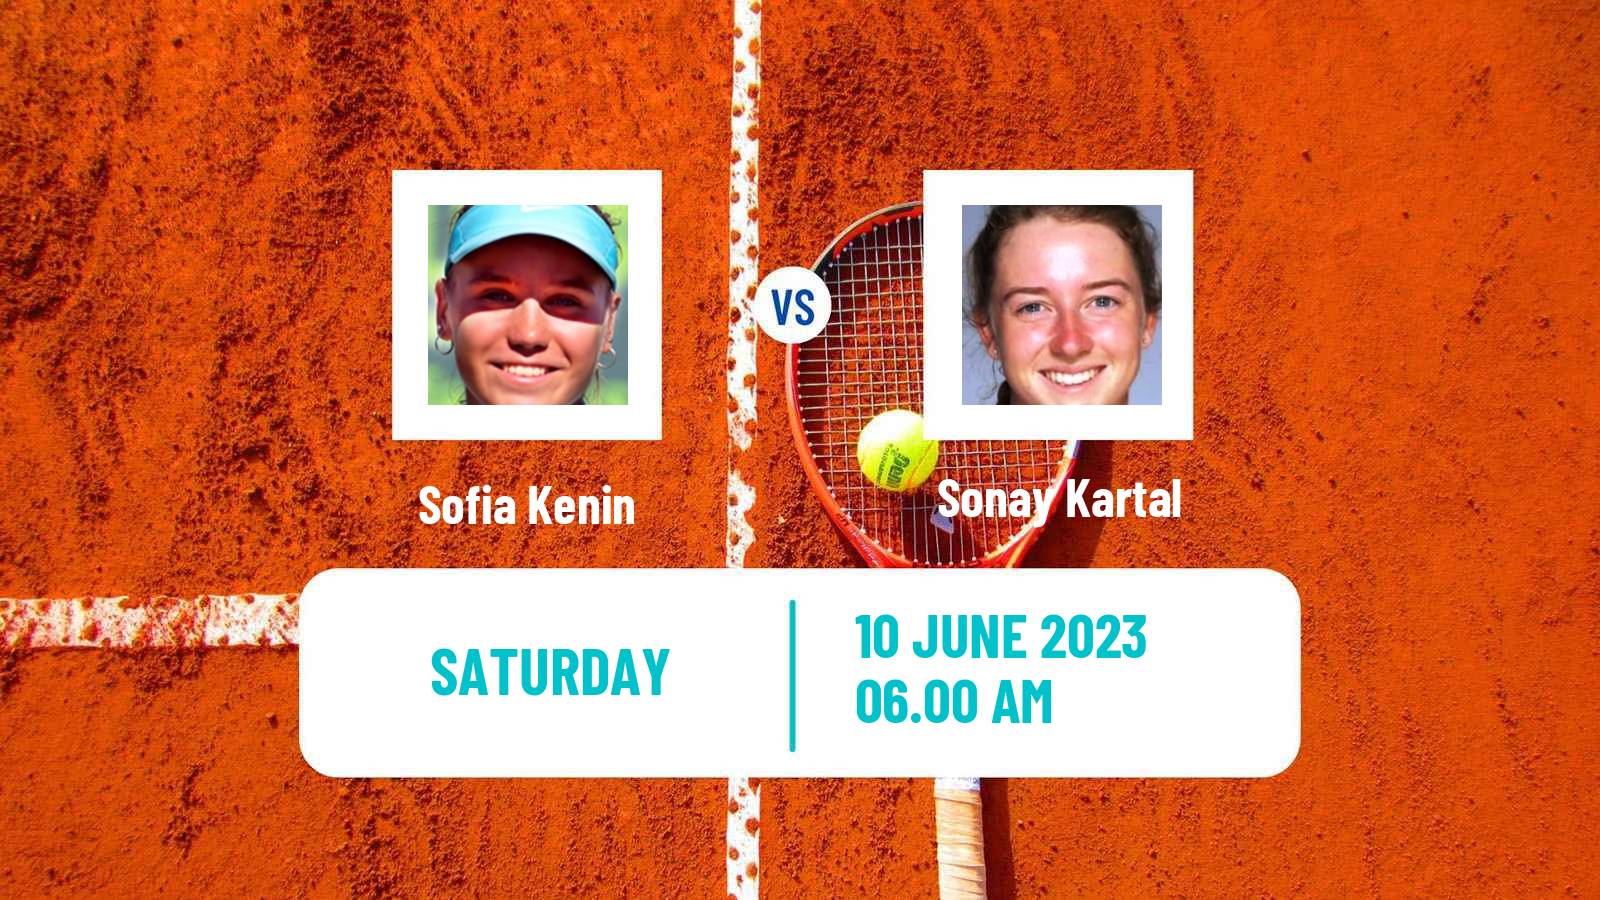 Tennis WTA Nottingham Sofia Kenin - Sonay Kartal